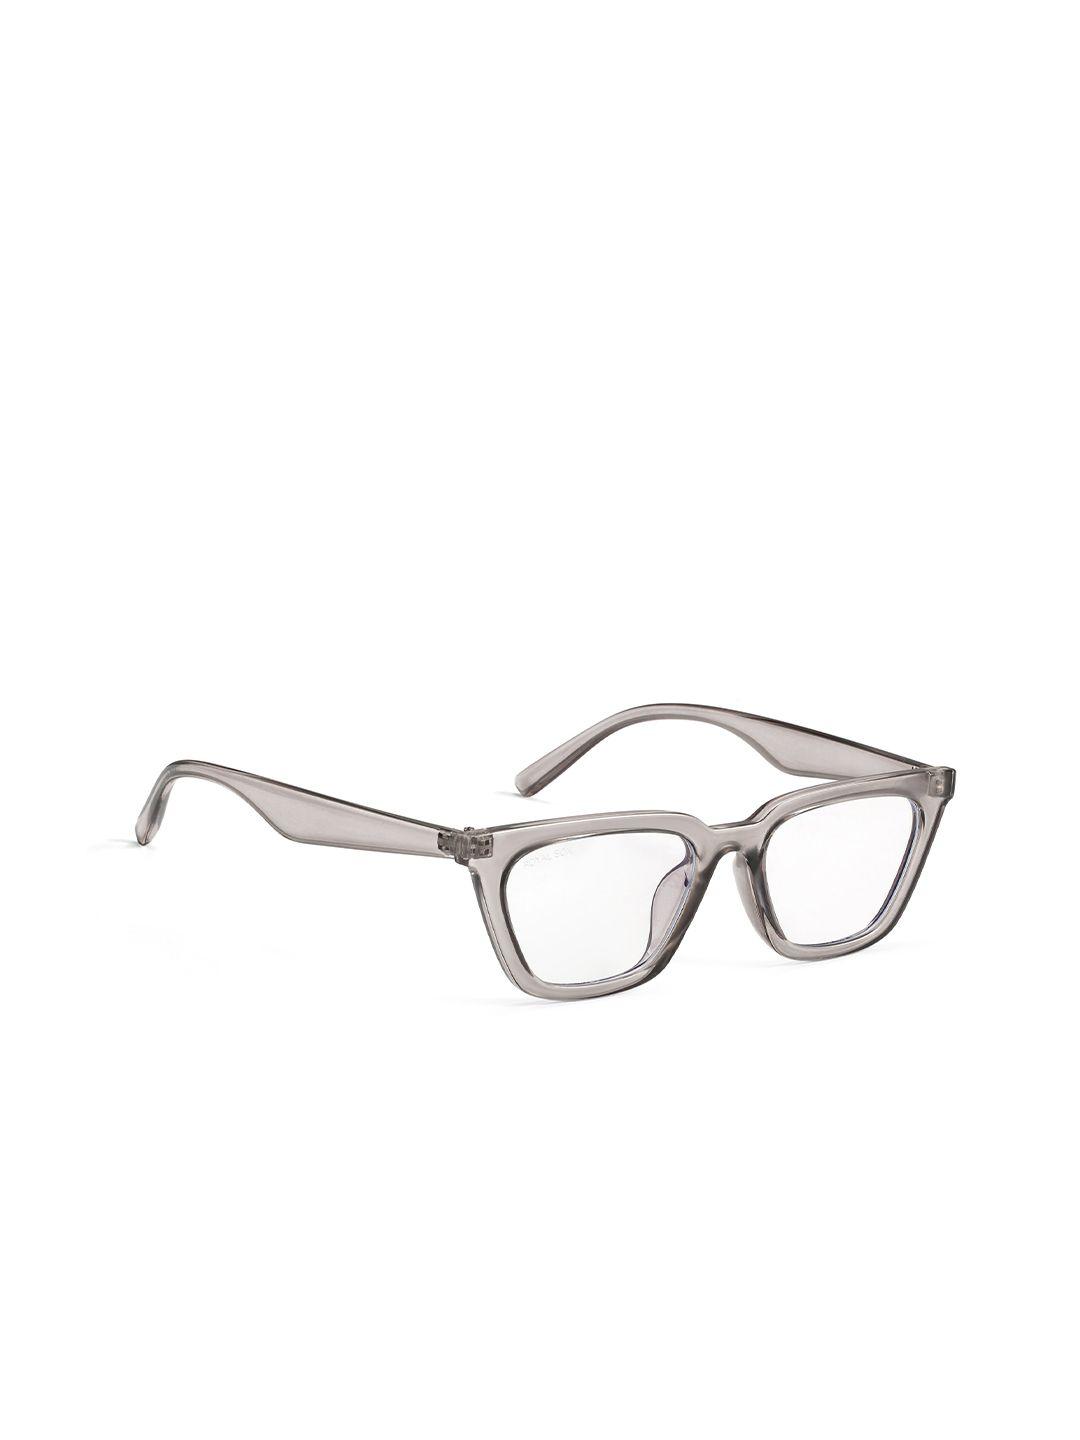 royal son unisex clear lens & gunmetal-toned wayfarer sunglasses - chi00126-c2-clear